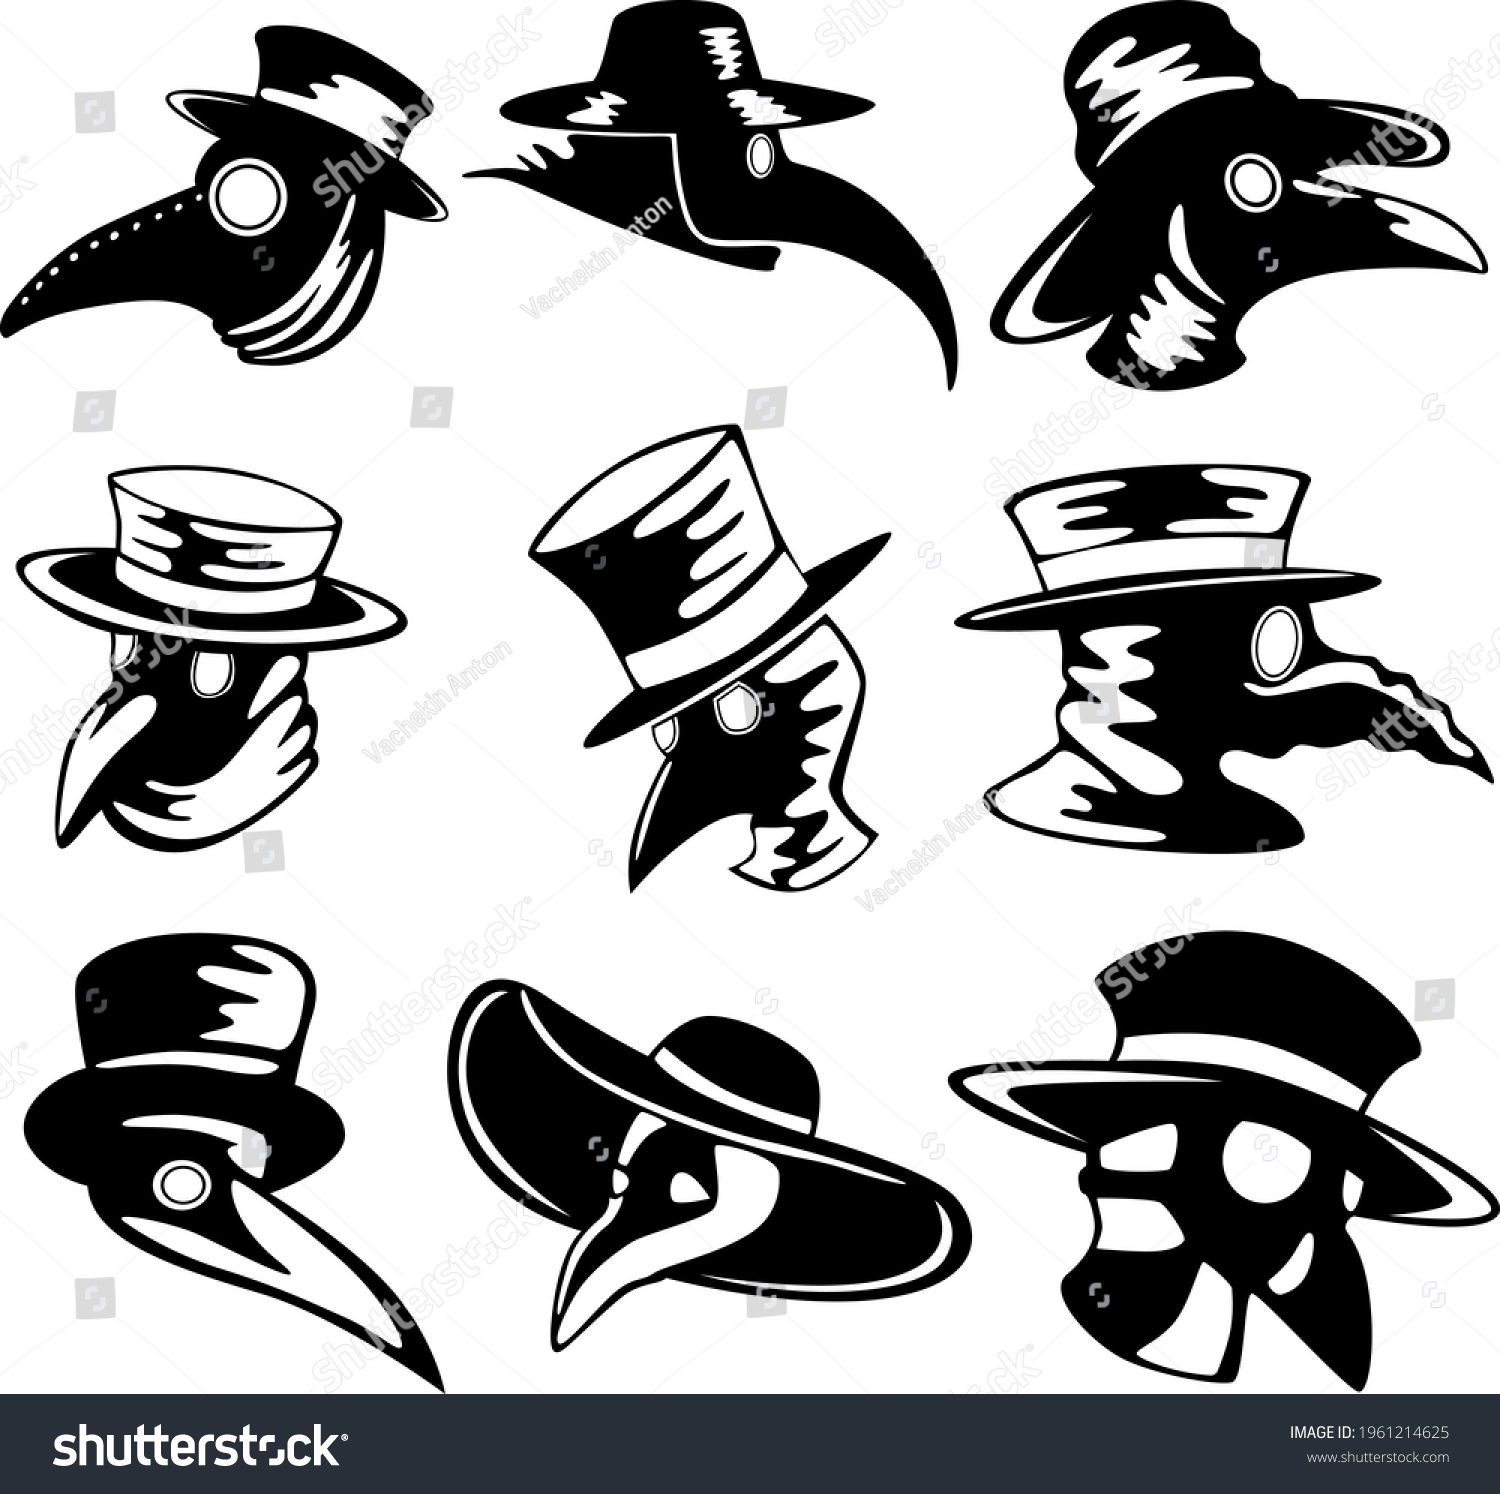 SVG of A set of nine plague doctor masks isolated on a white background. Vector illustration. svg